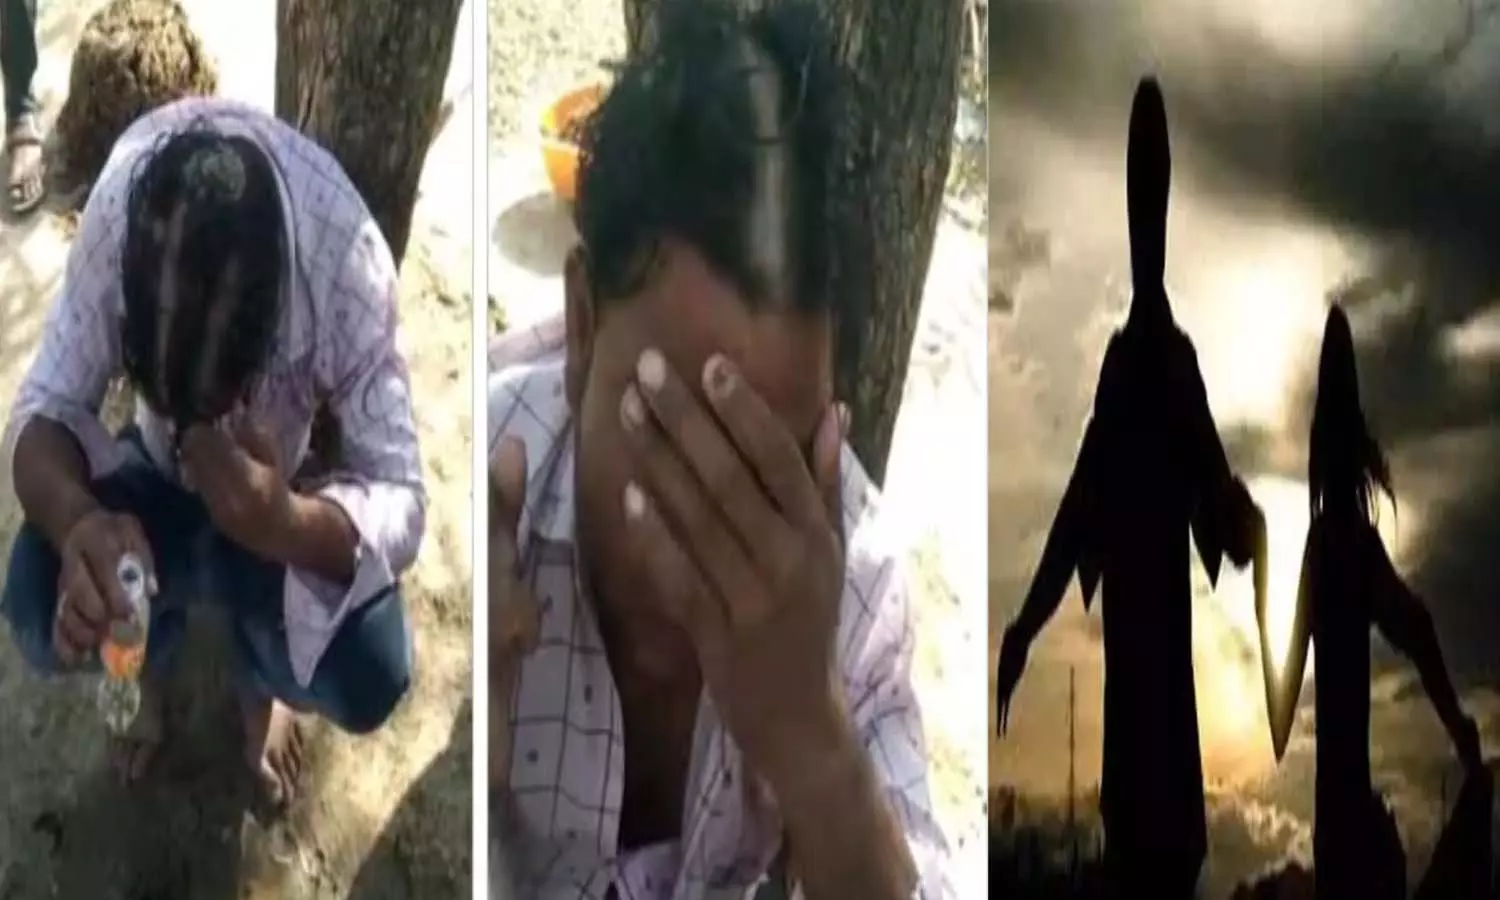 punishment for Love Affairs with married woman made him drink urine Madhya Pradesh Ujjain News in hindi